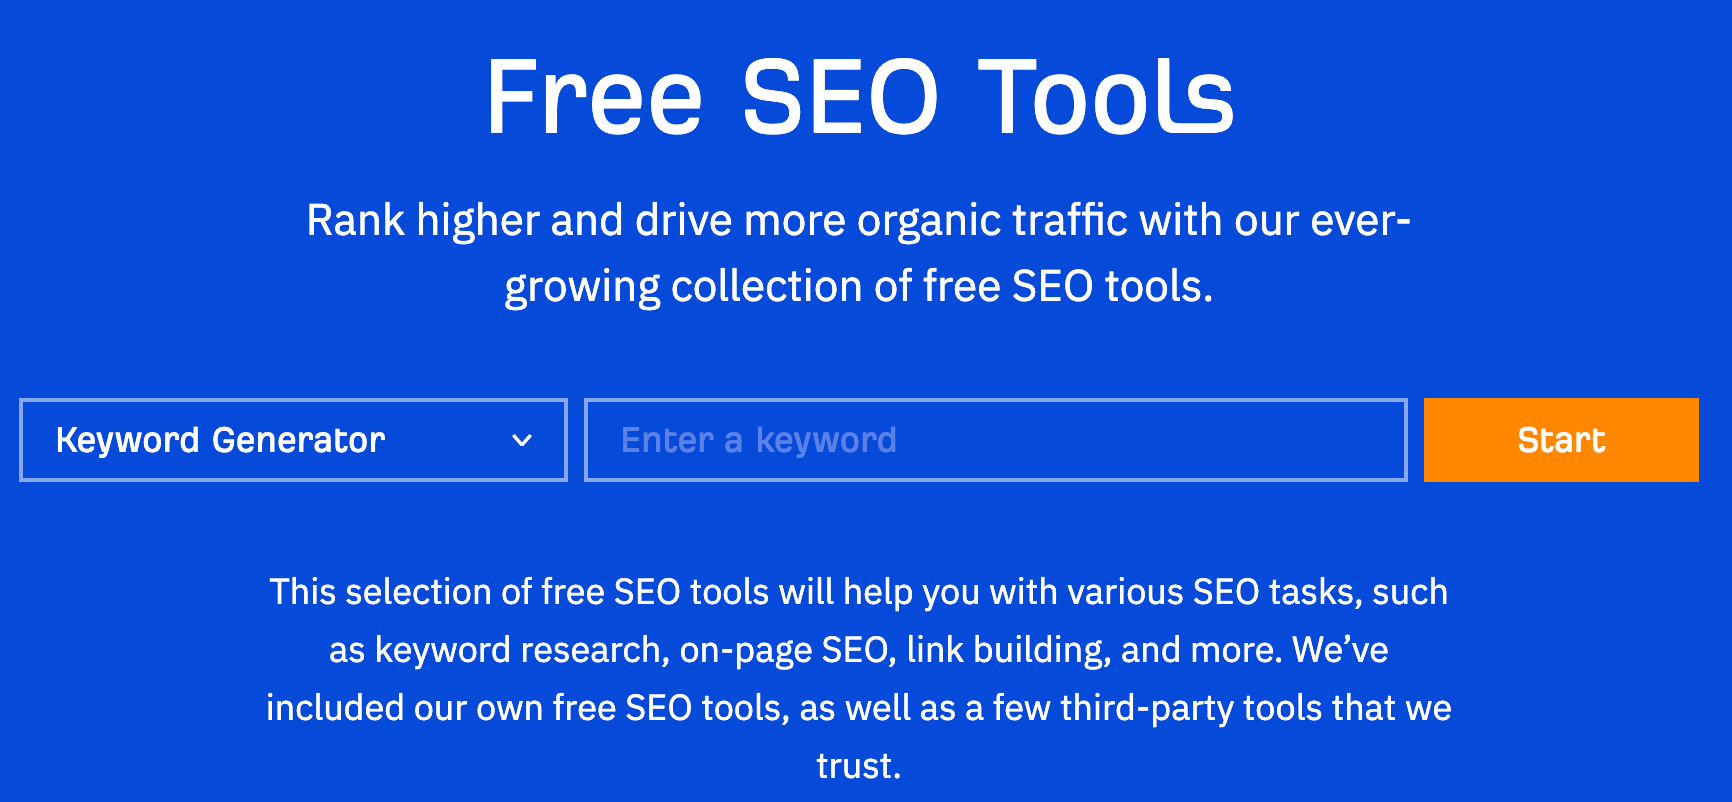 Ahrefs' Free SEO Tools page